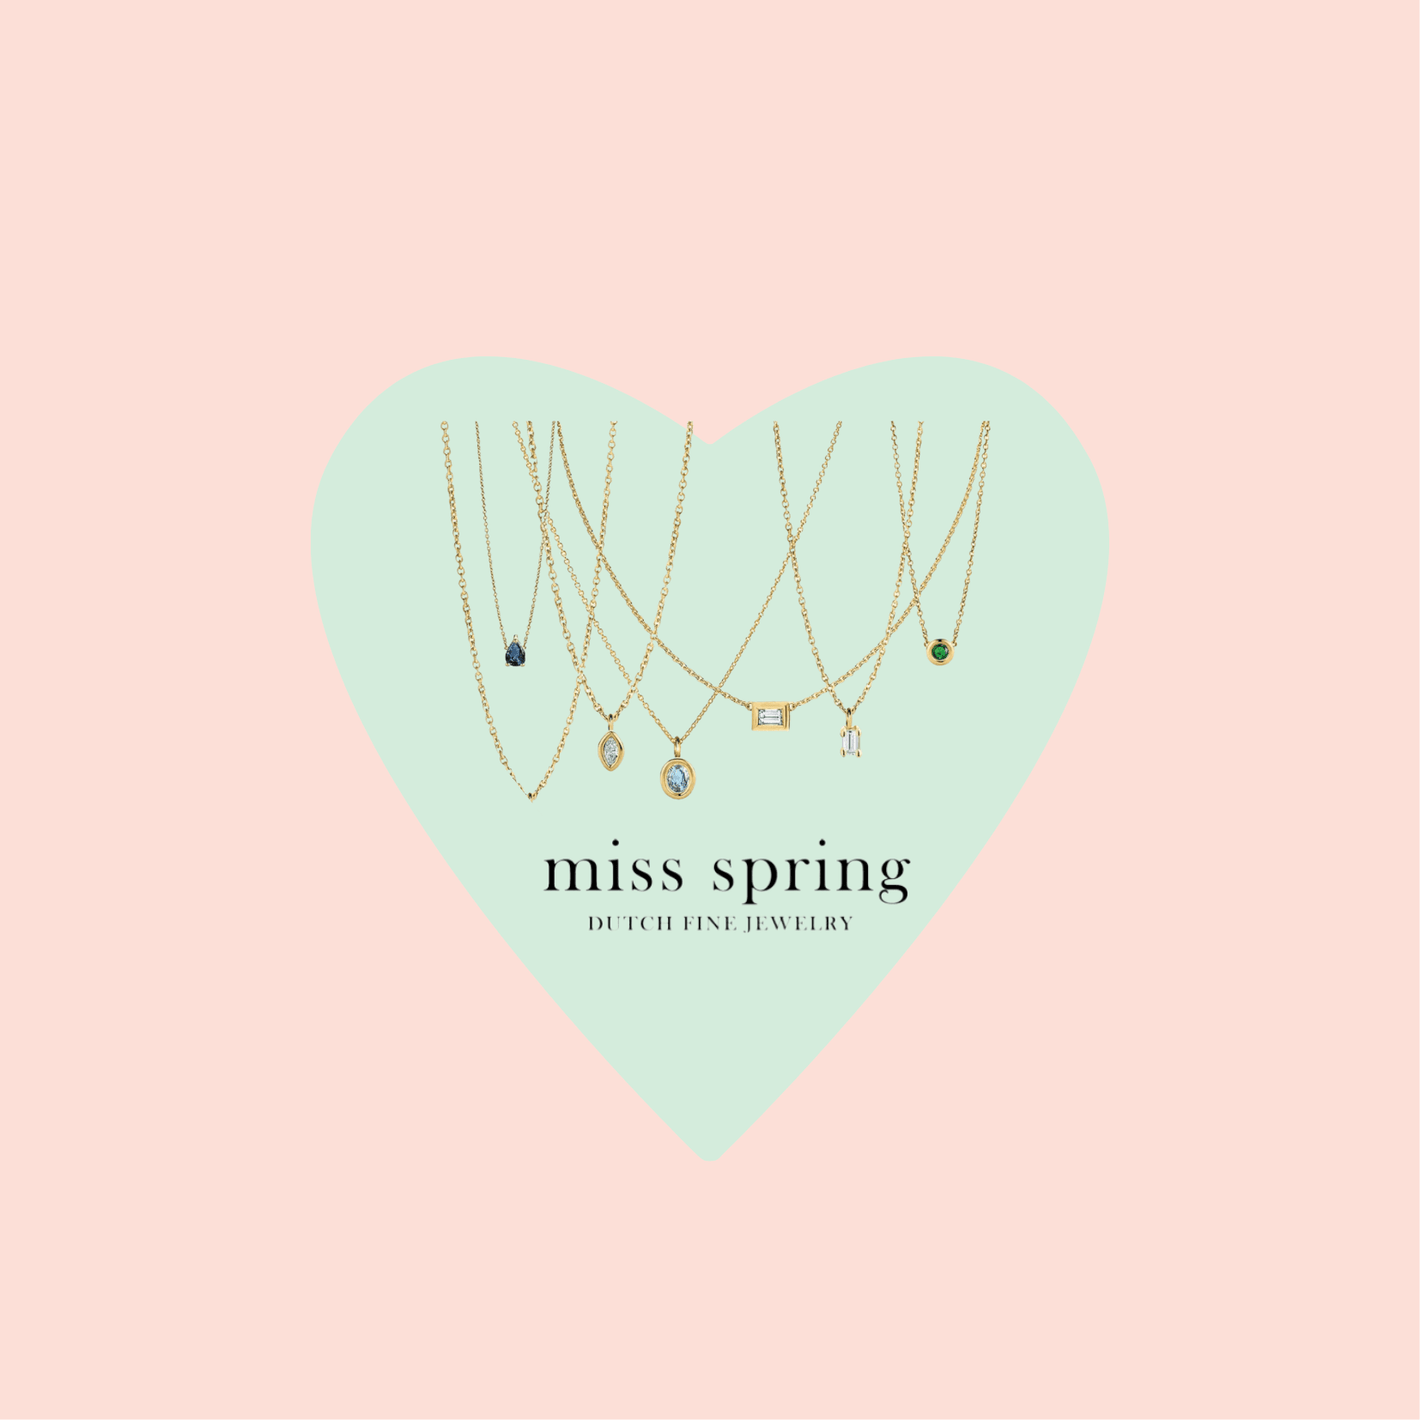 Vier Valentijn met 'Miss Spring' - Brunott Juwelier